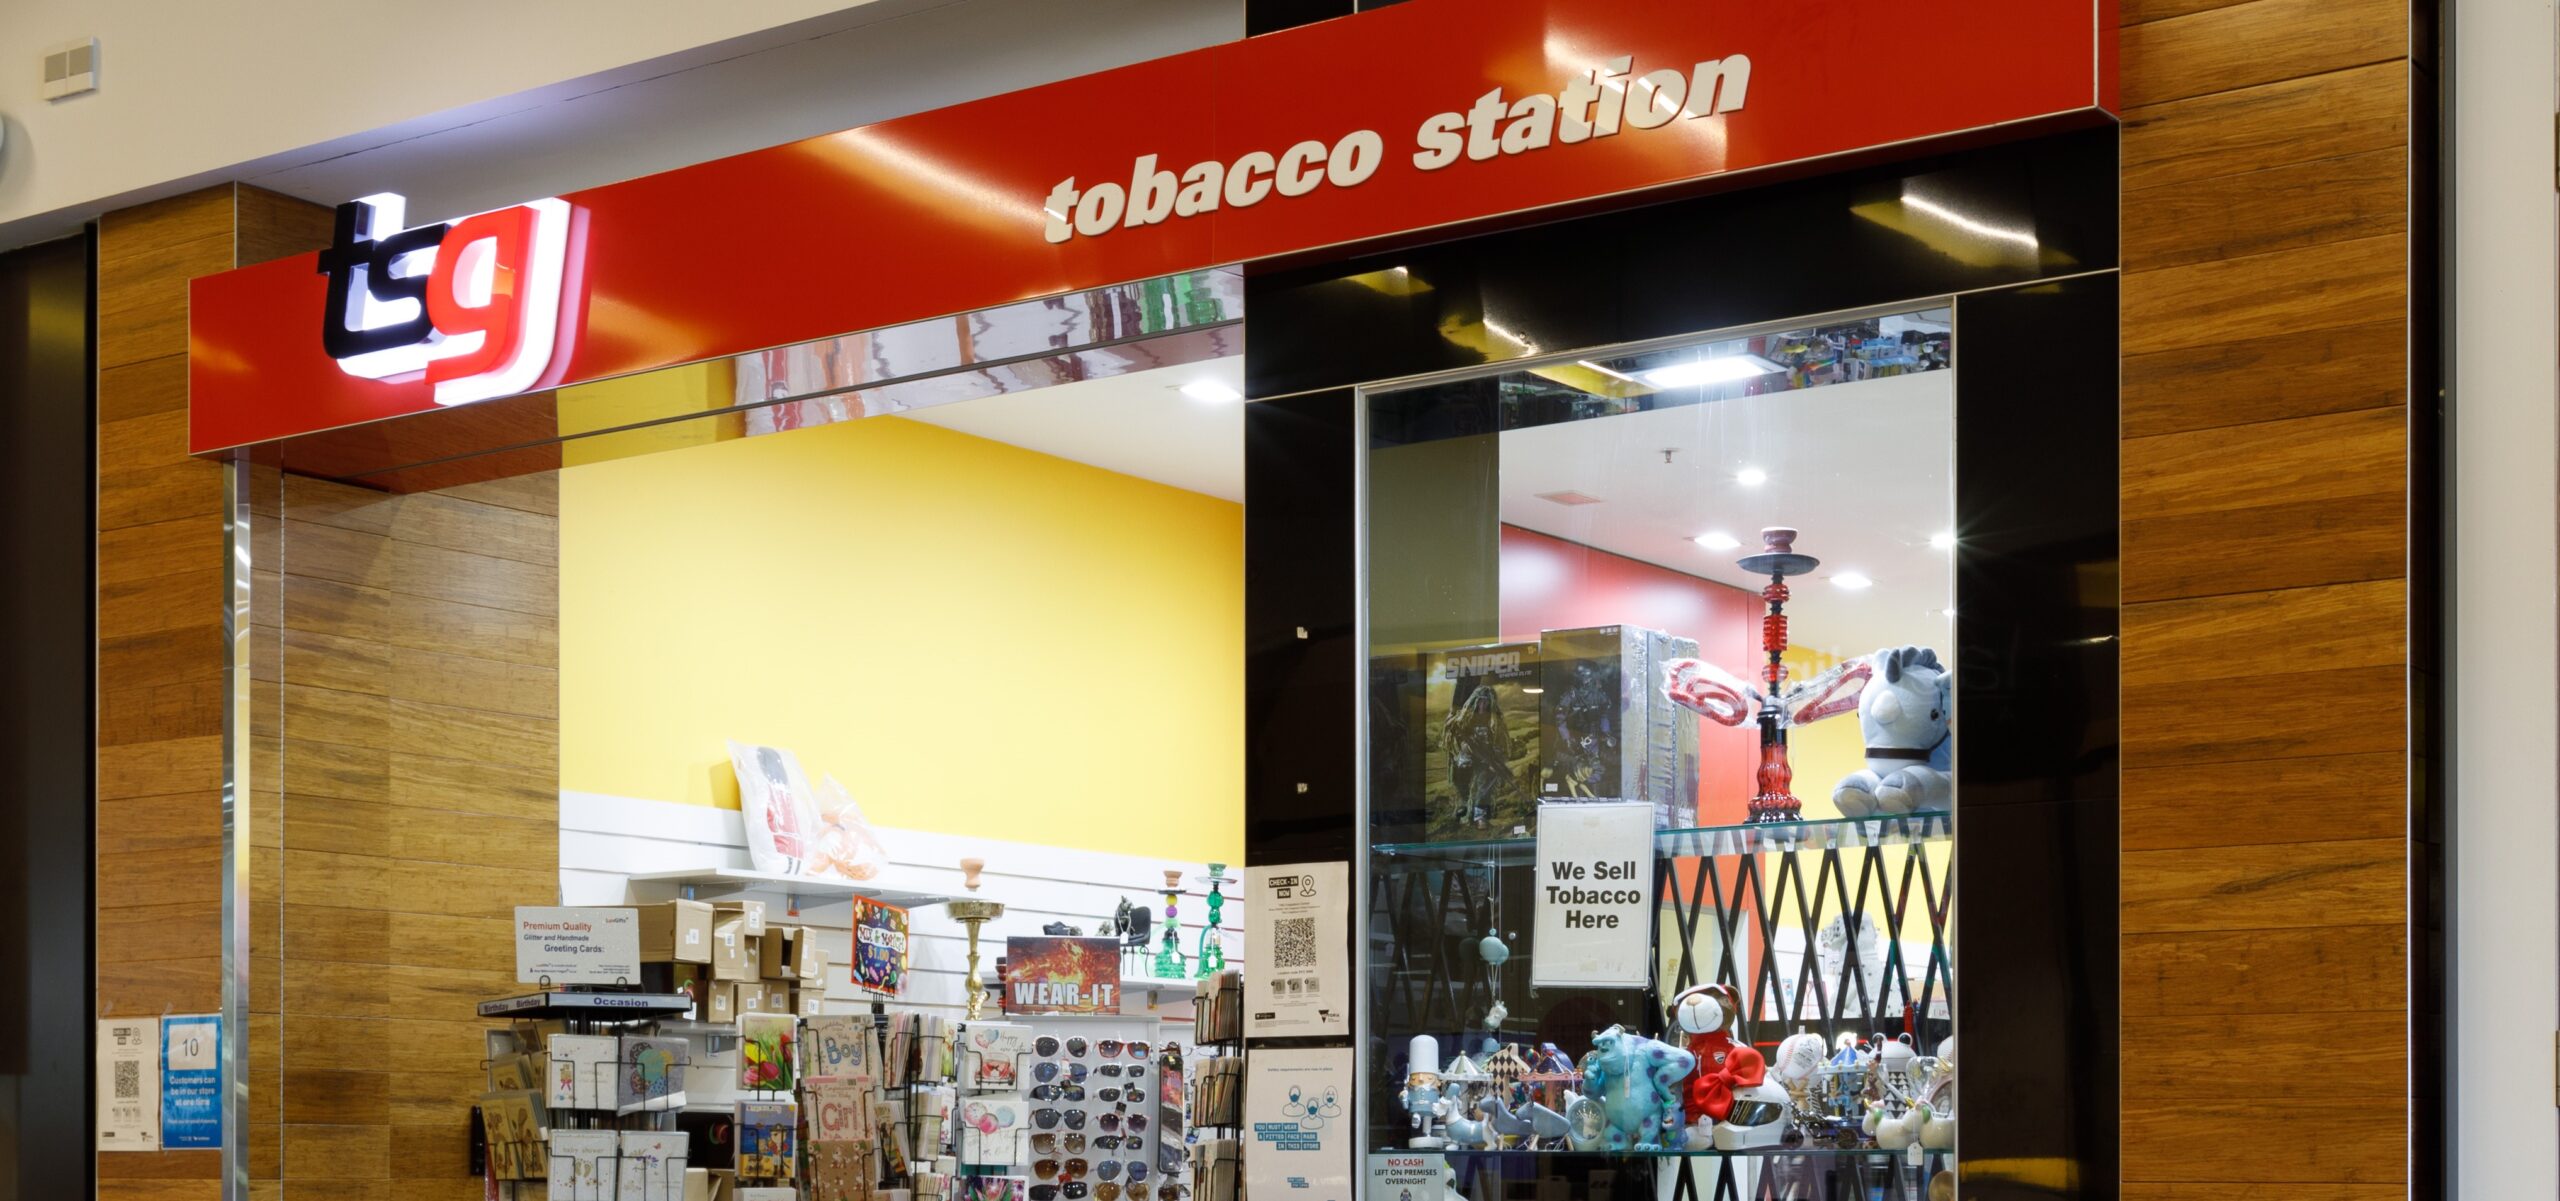 Tobacco Station tsg